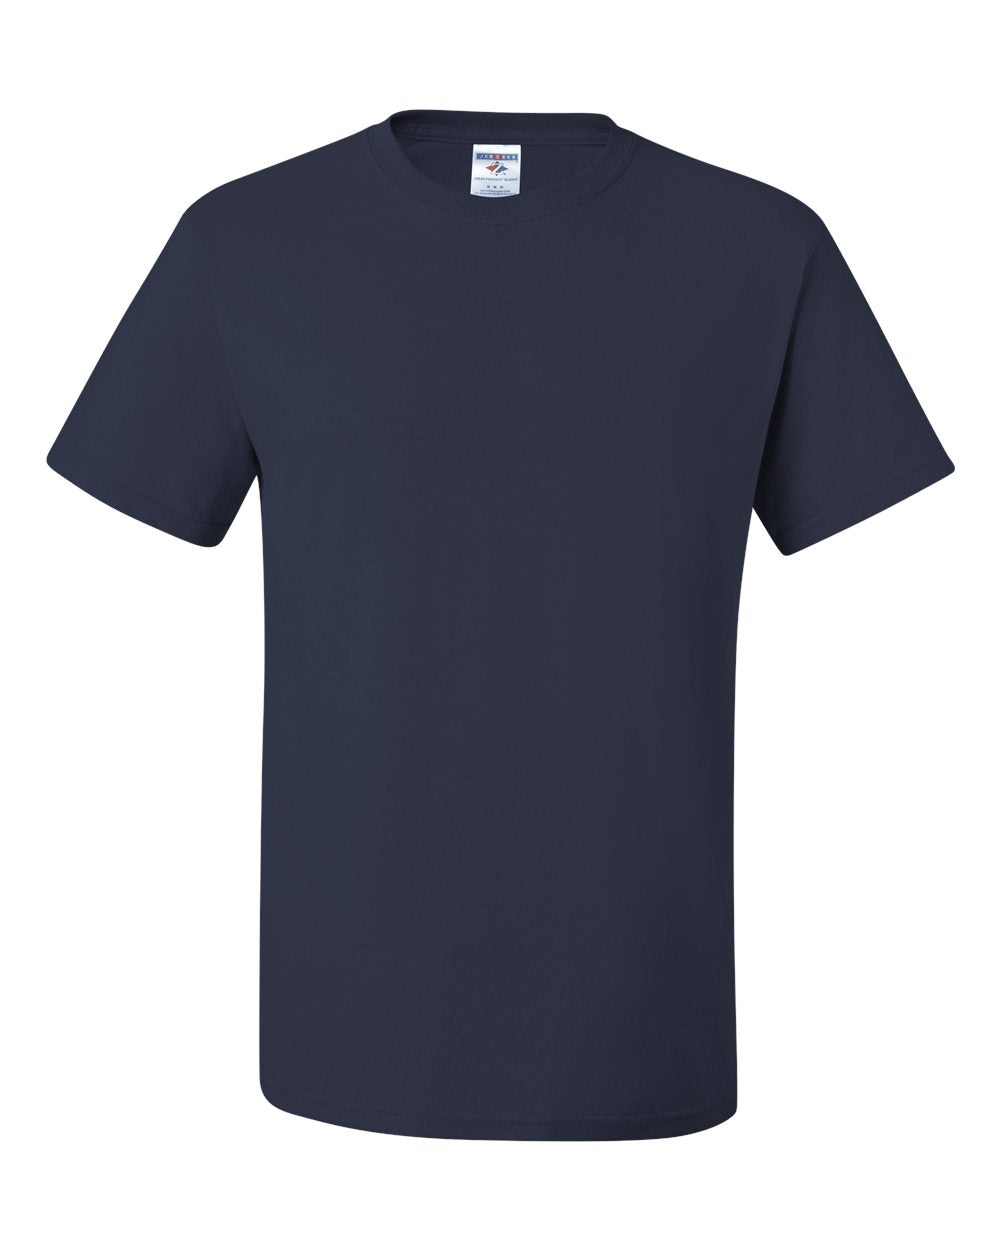 Navy Short Sleeve T-Shirt